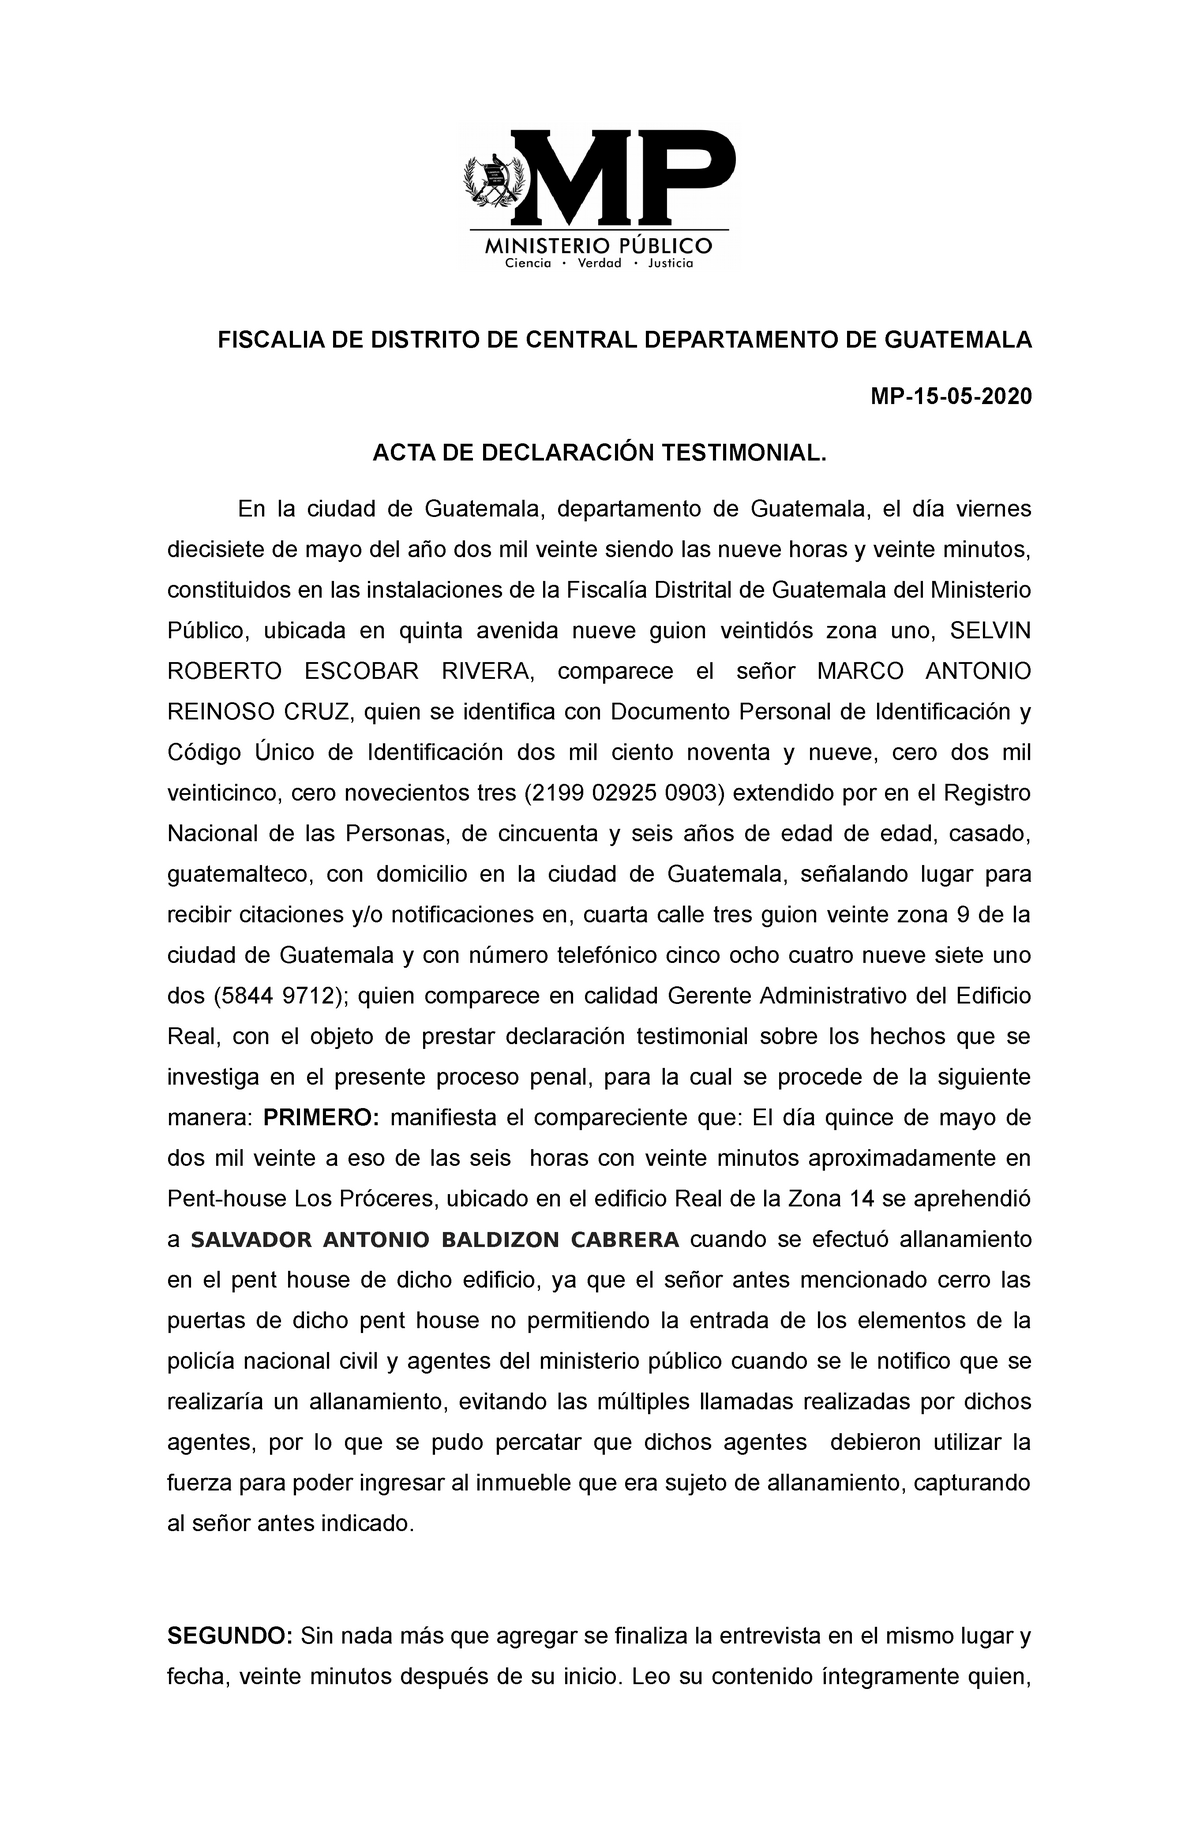  de Declaracion Testimonial - FISCALIA DE DISTRITO DE CENTRAL  DEPARTAMENTO DE GUATEMALA - Studocu